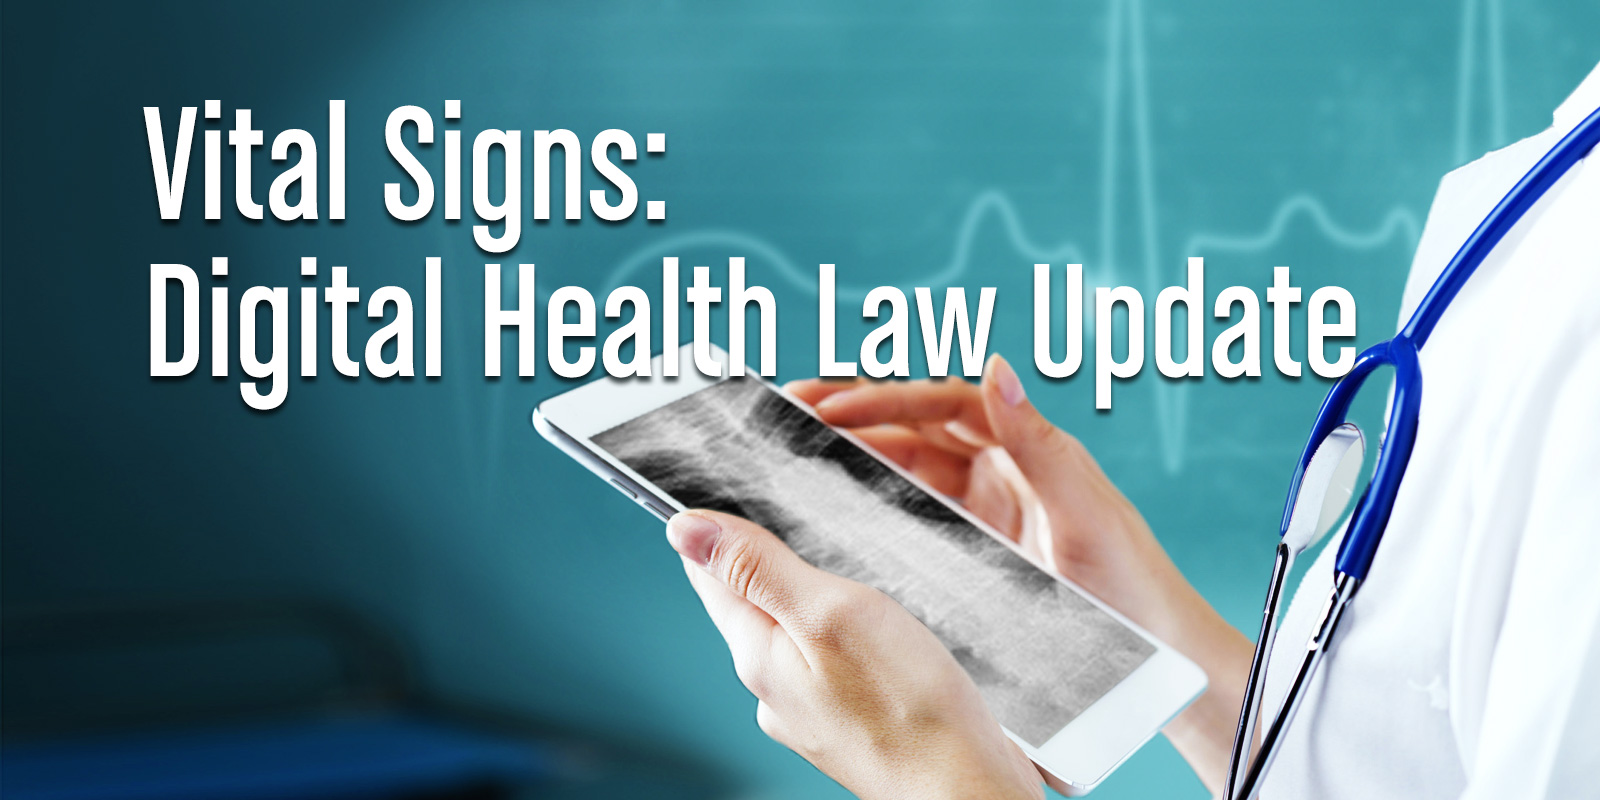 Vital Signs: Digital Health Law Update social graphic